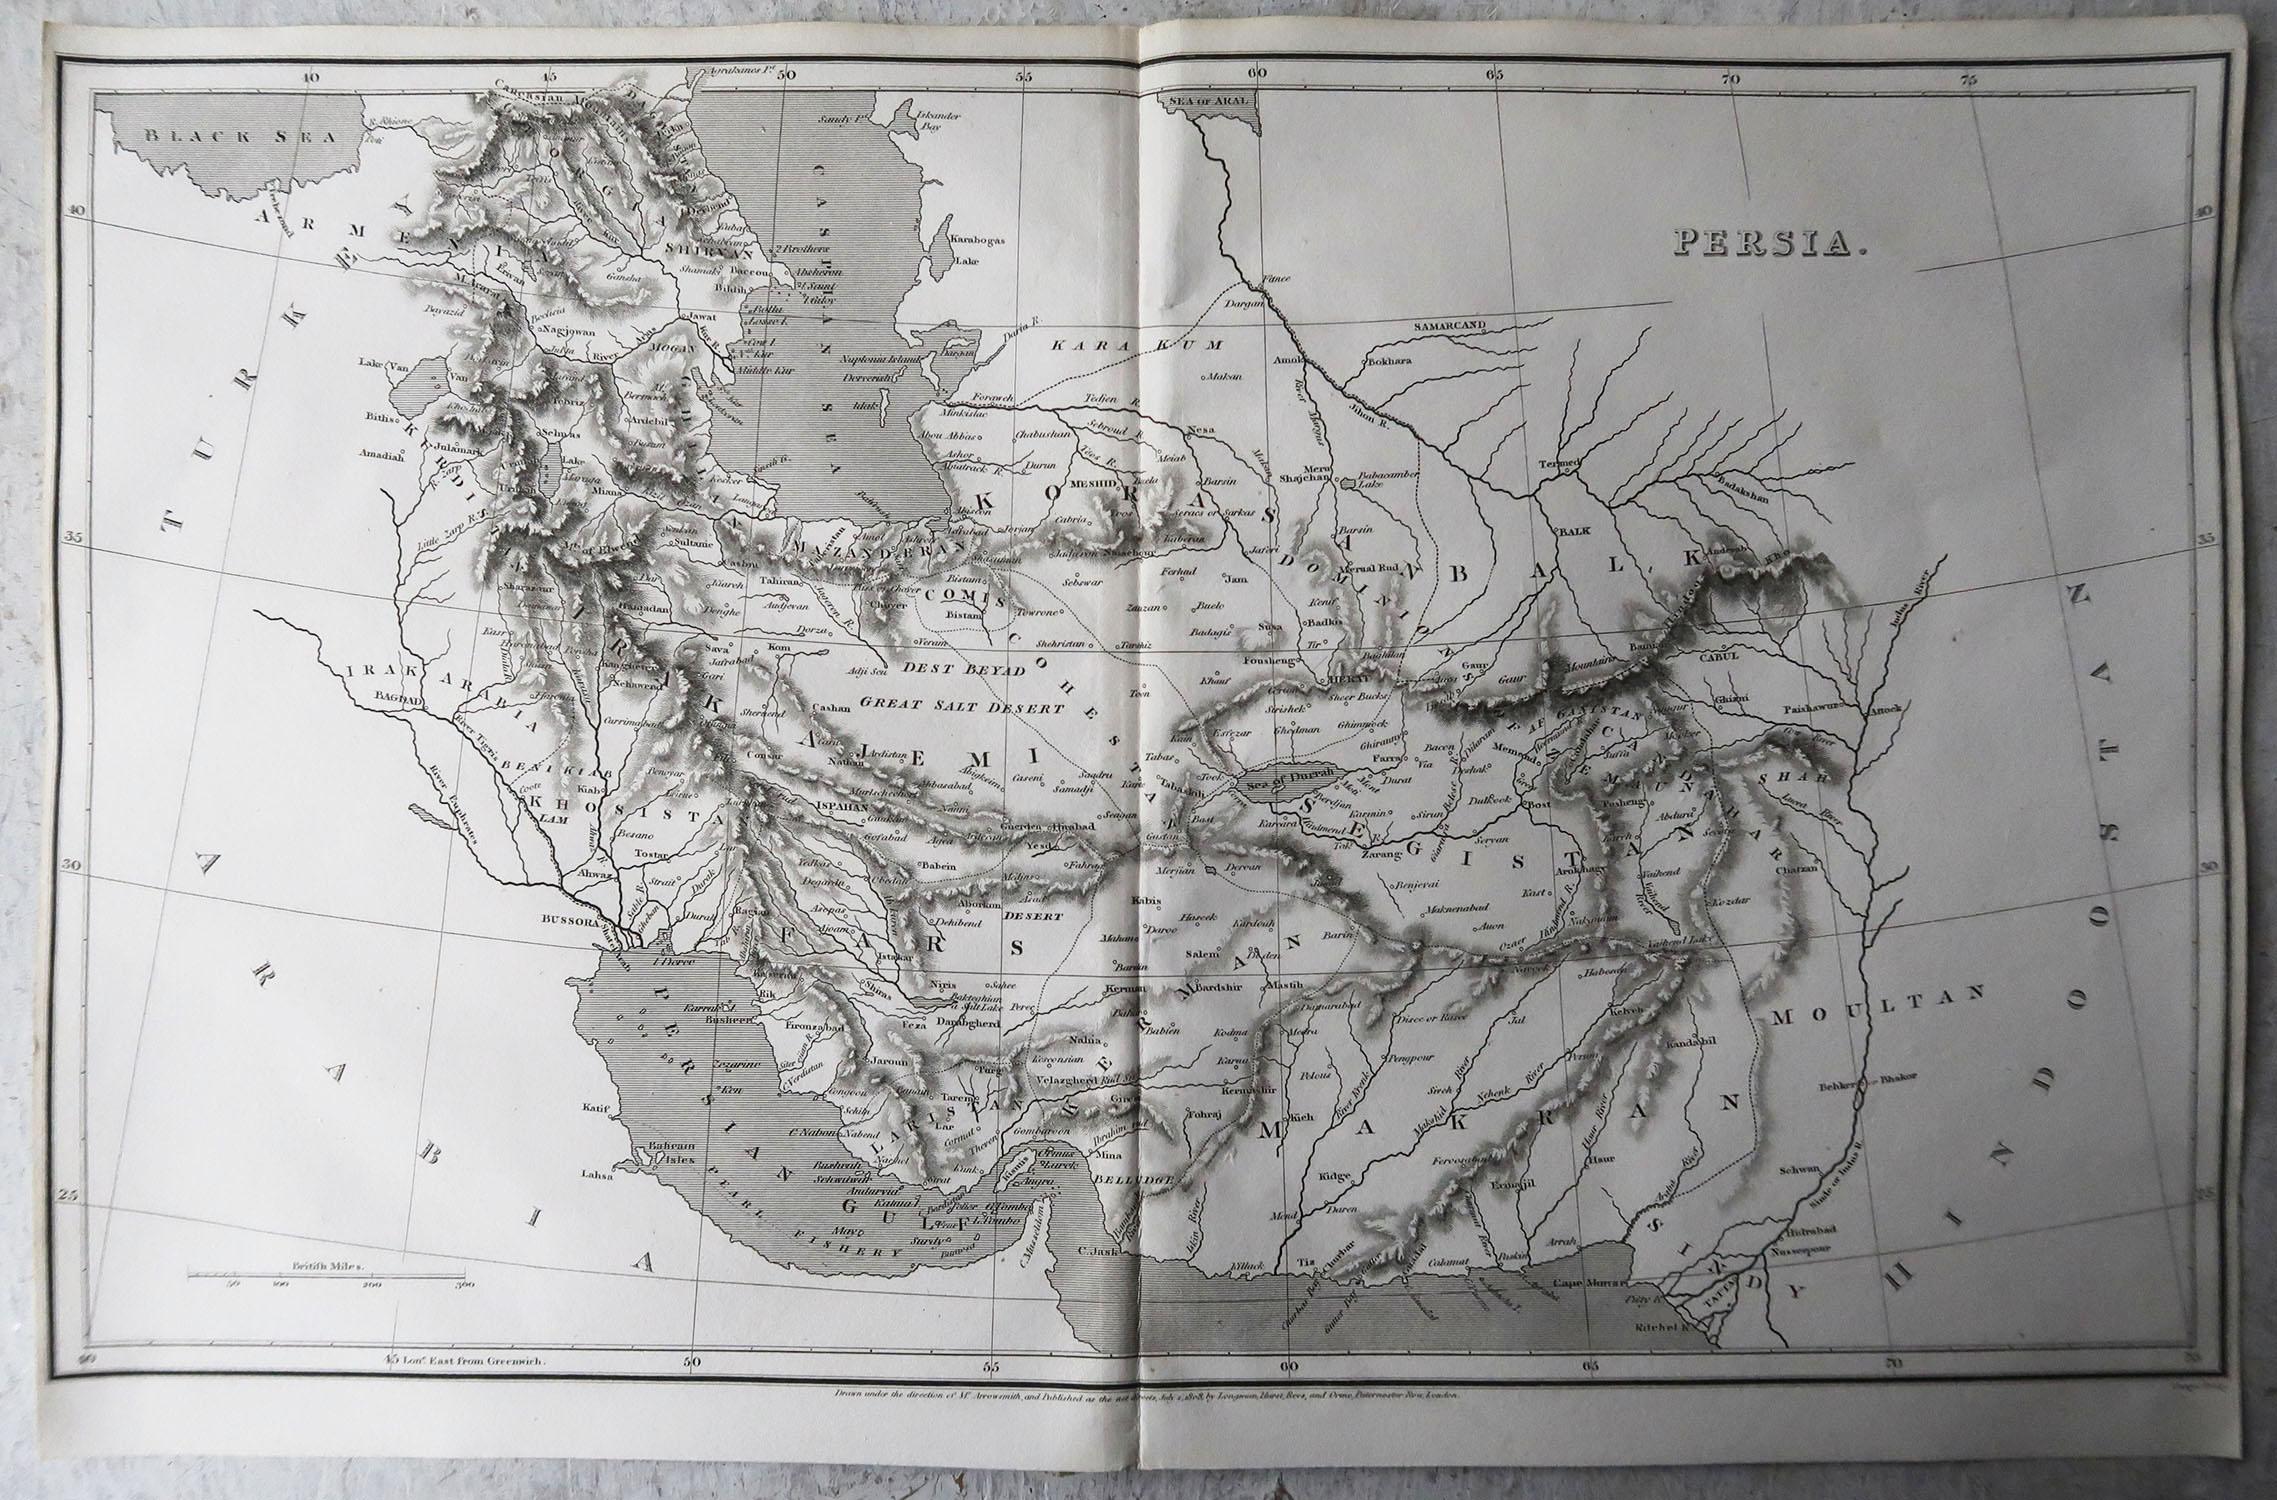 Other Original Antique Map of Persia / Iran, Arrowsmith, 1820